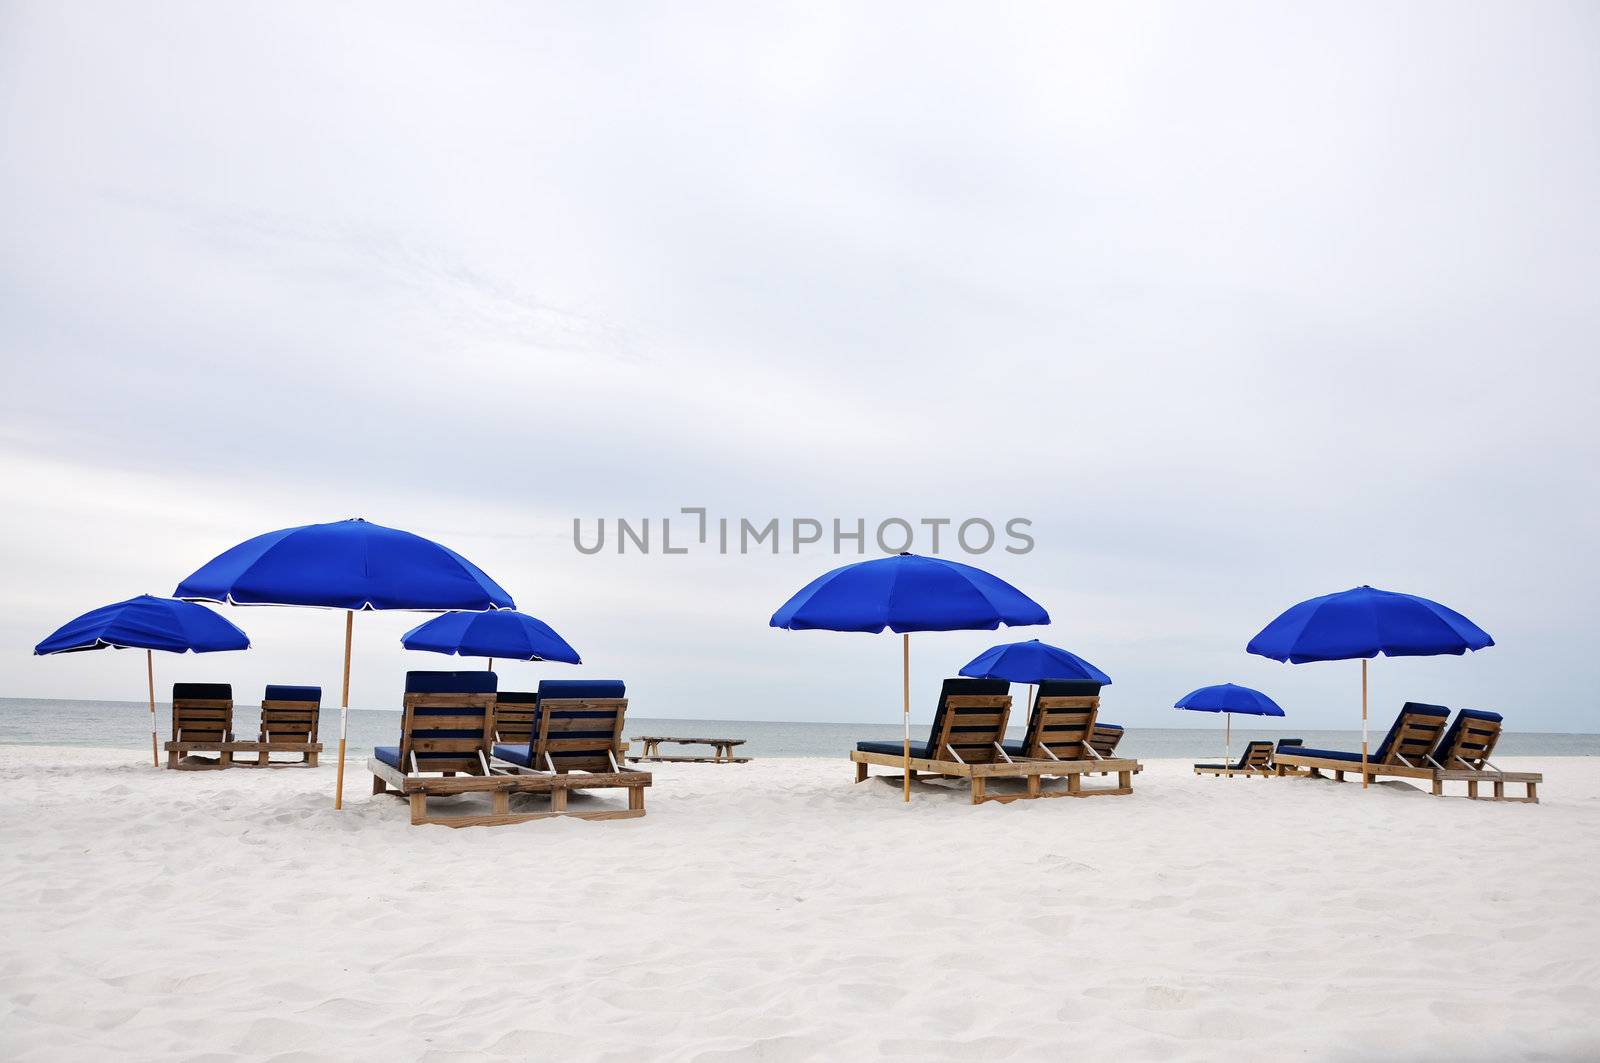 Beach umbrellas and chairs on deserted beach.  